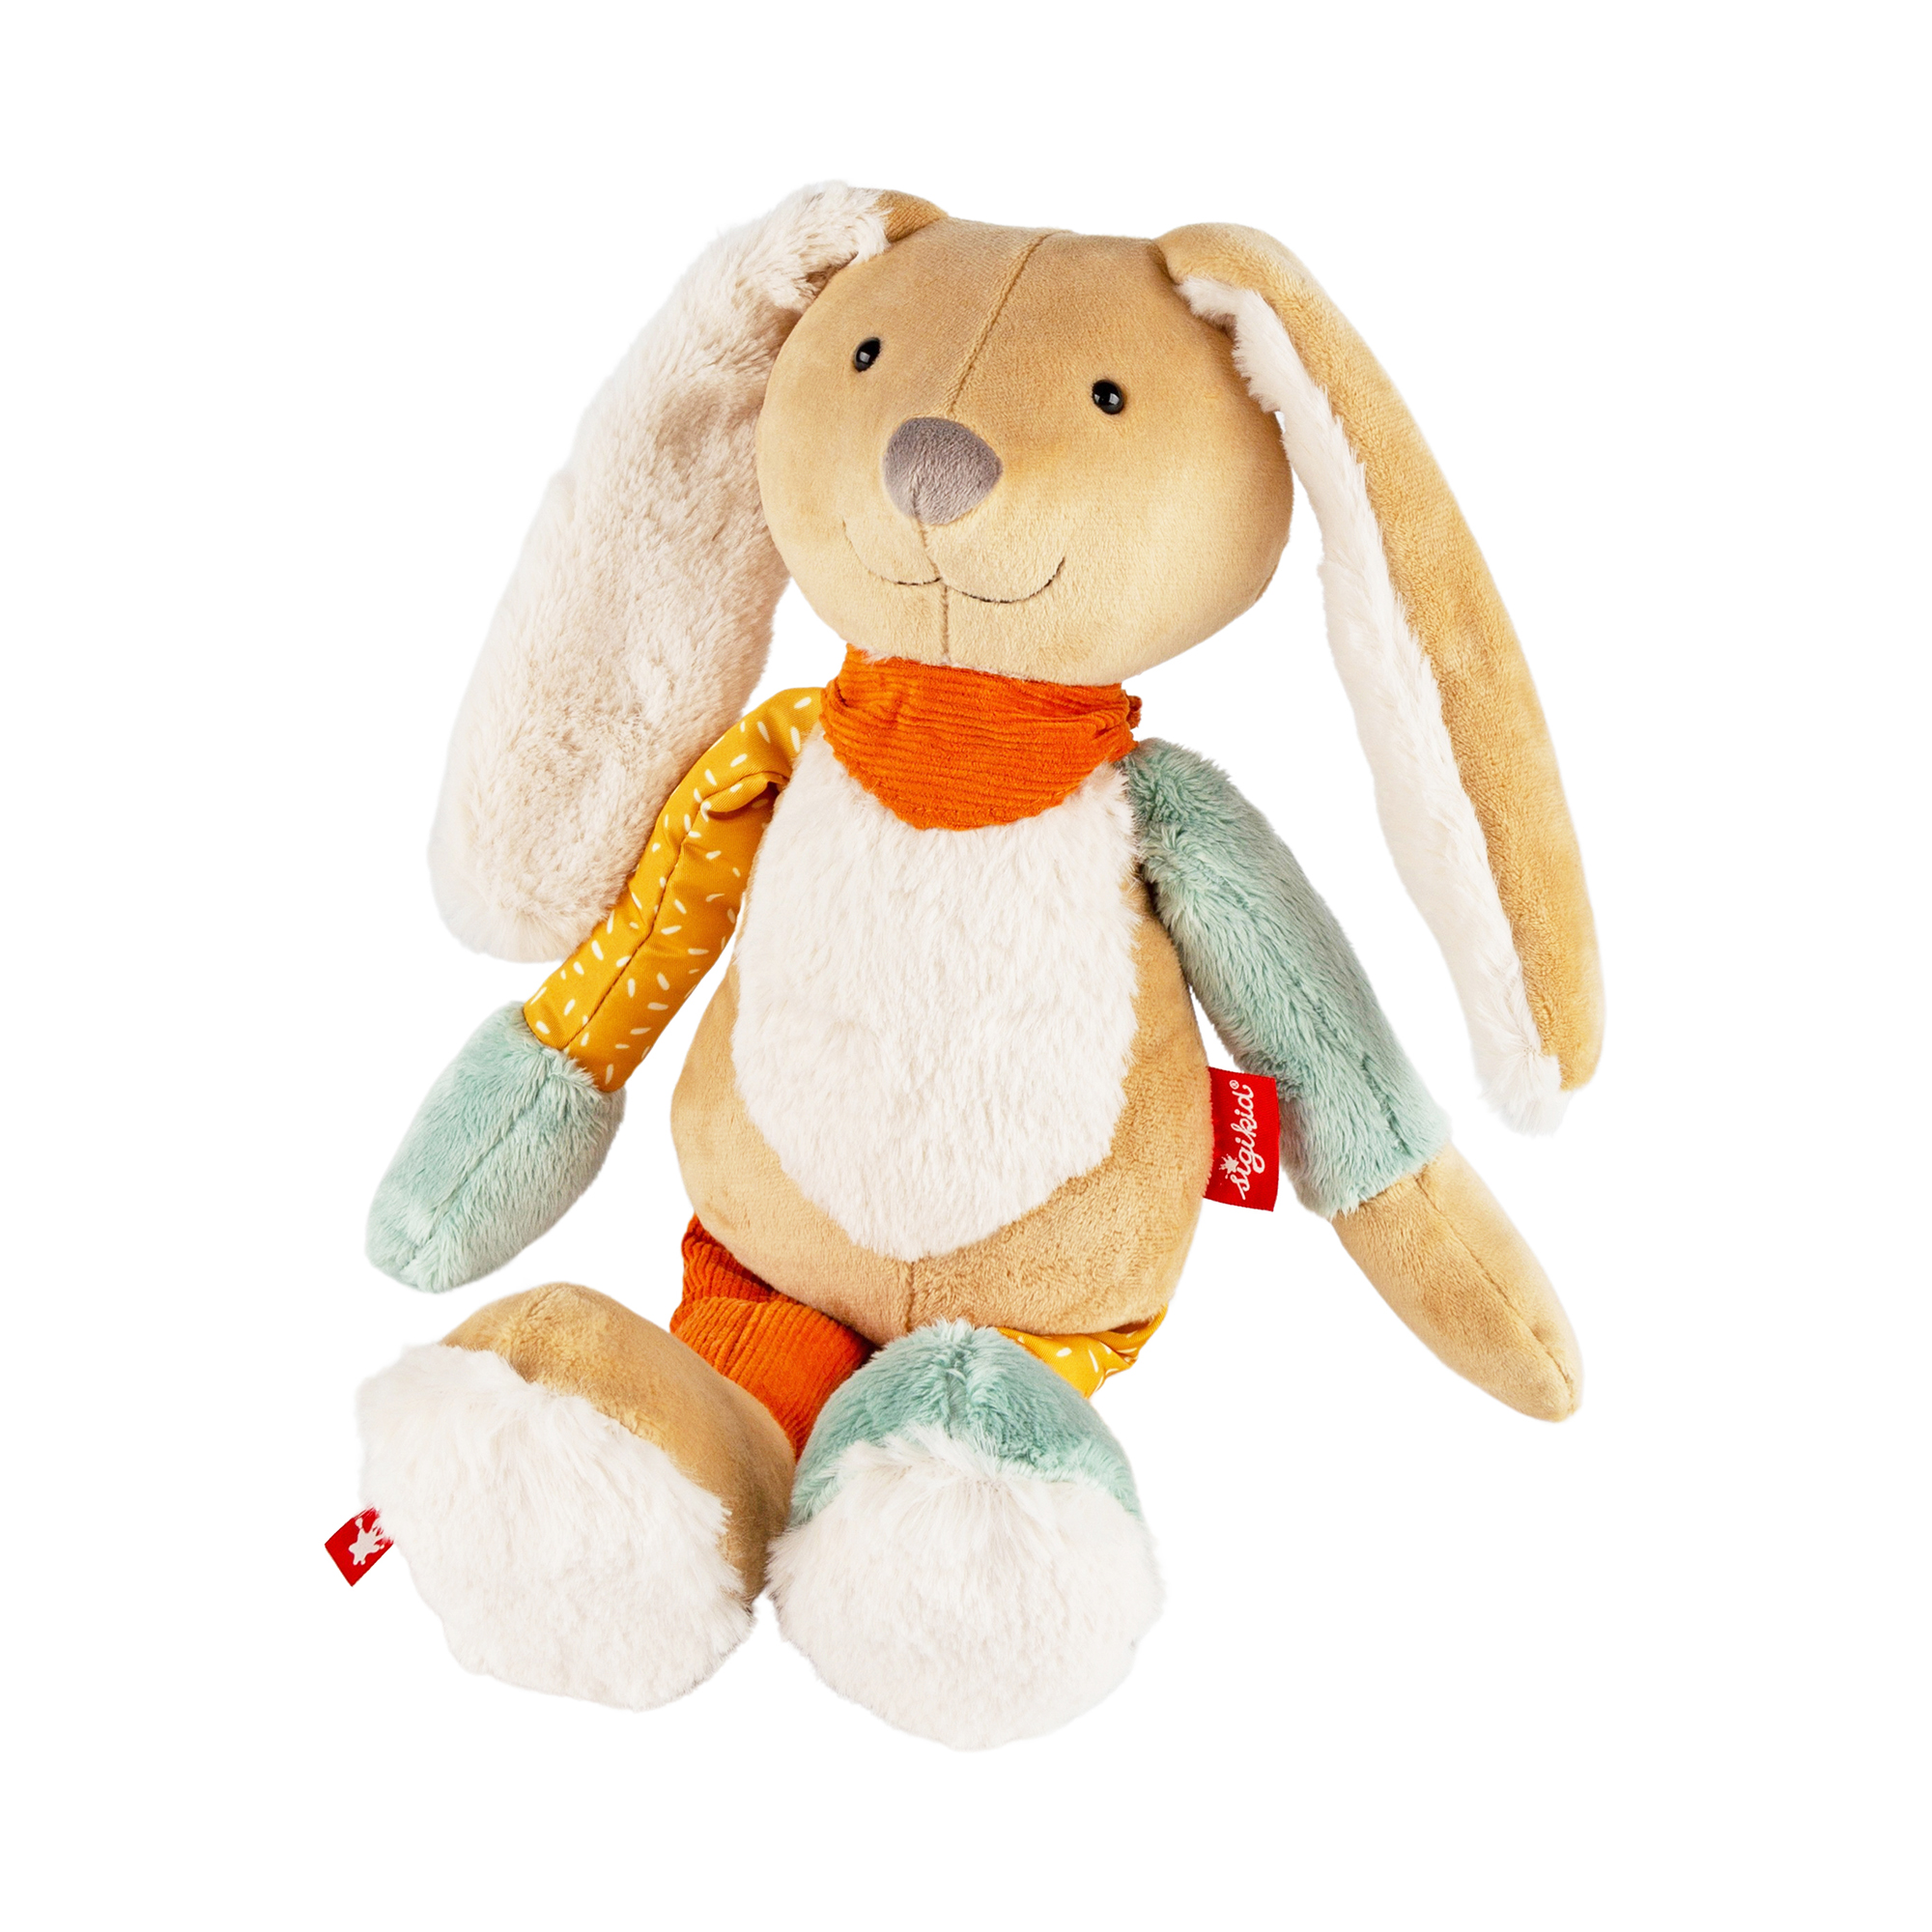 Plush toy rabbit, Patchwork Sweety